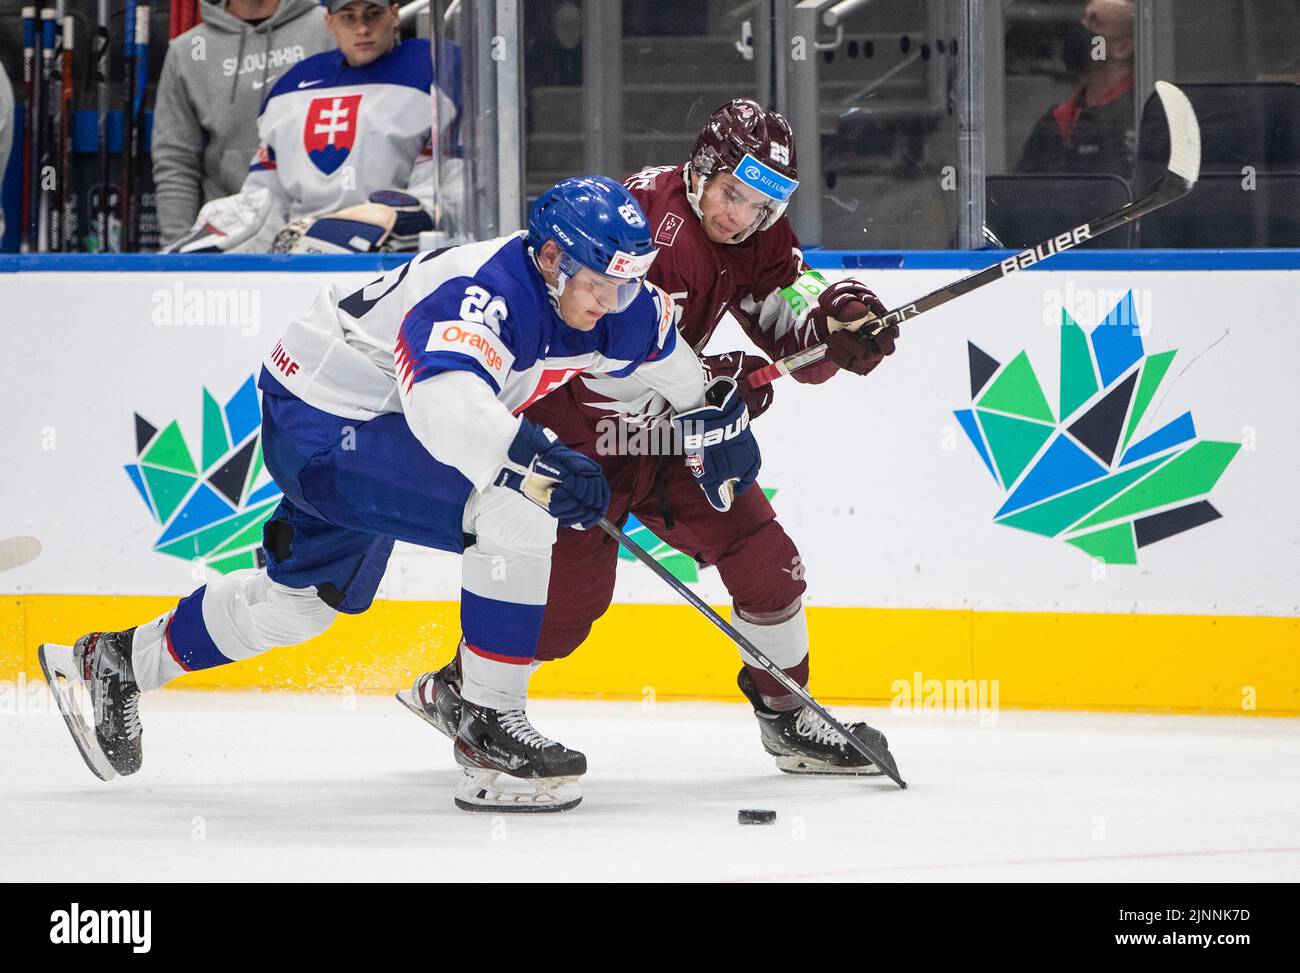 August 12, 2022, EDMONTON, AB, CANADA Slovakias Simon Groch and Latvias Felikss Gavars (25) battle for the puck during third period IIHF World Junior Hockey Championship action in Edmonton on Friday August